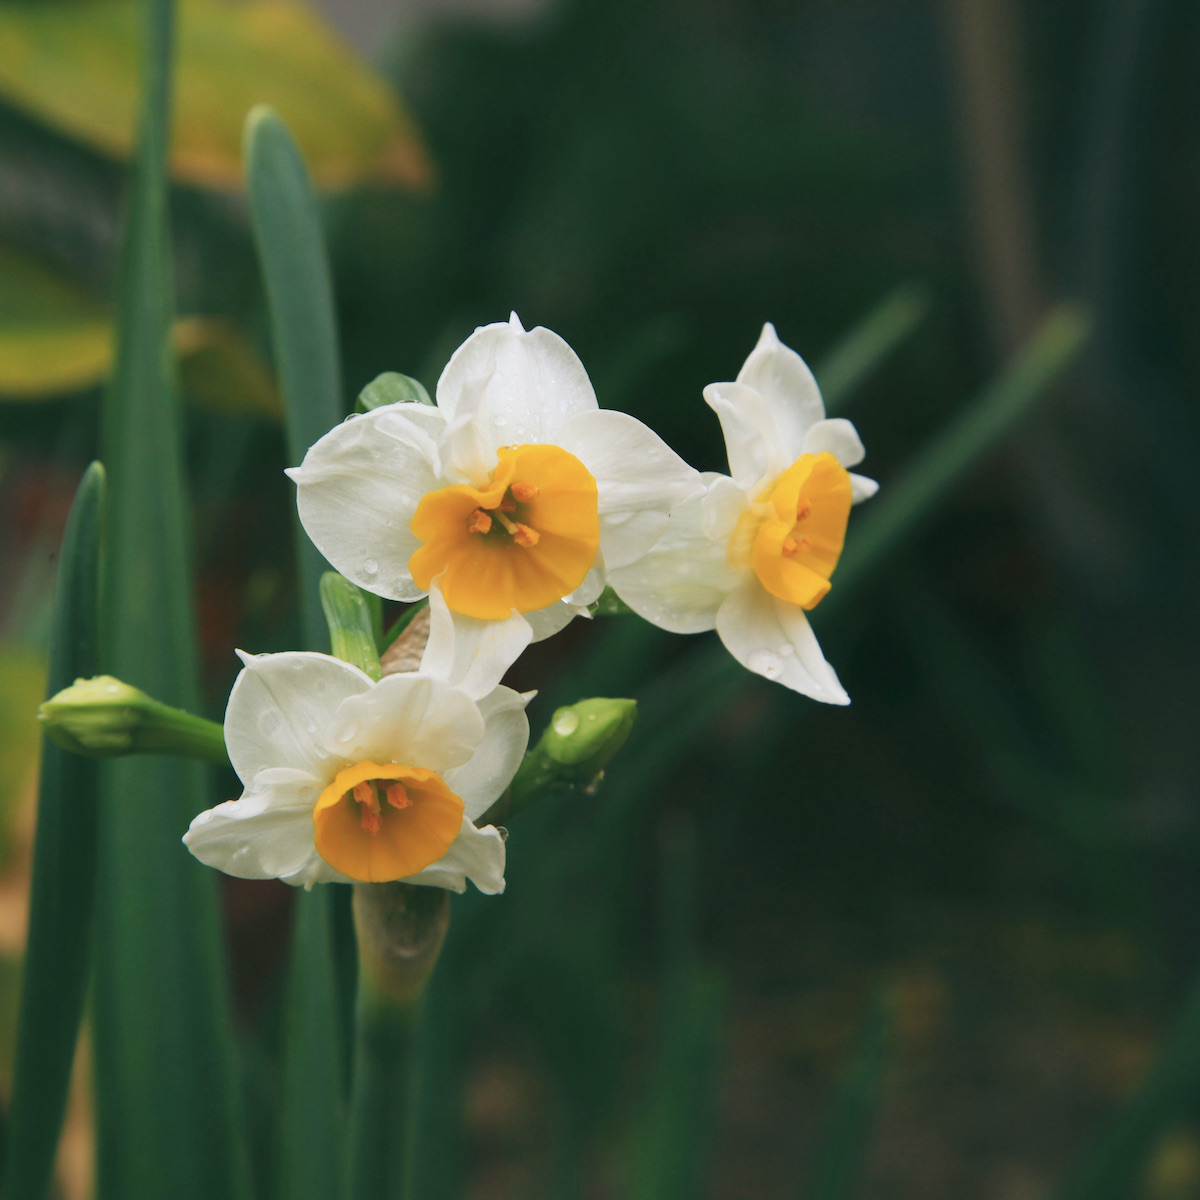 plante balcon ouest narcisse blanche jaune orange fleur - blog déco - clem around the corner